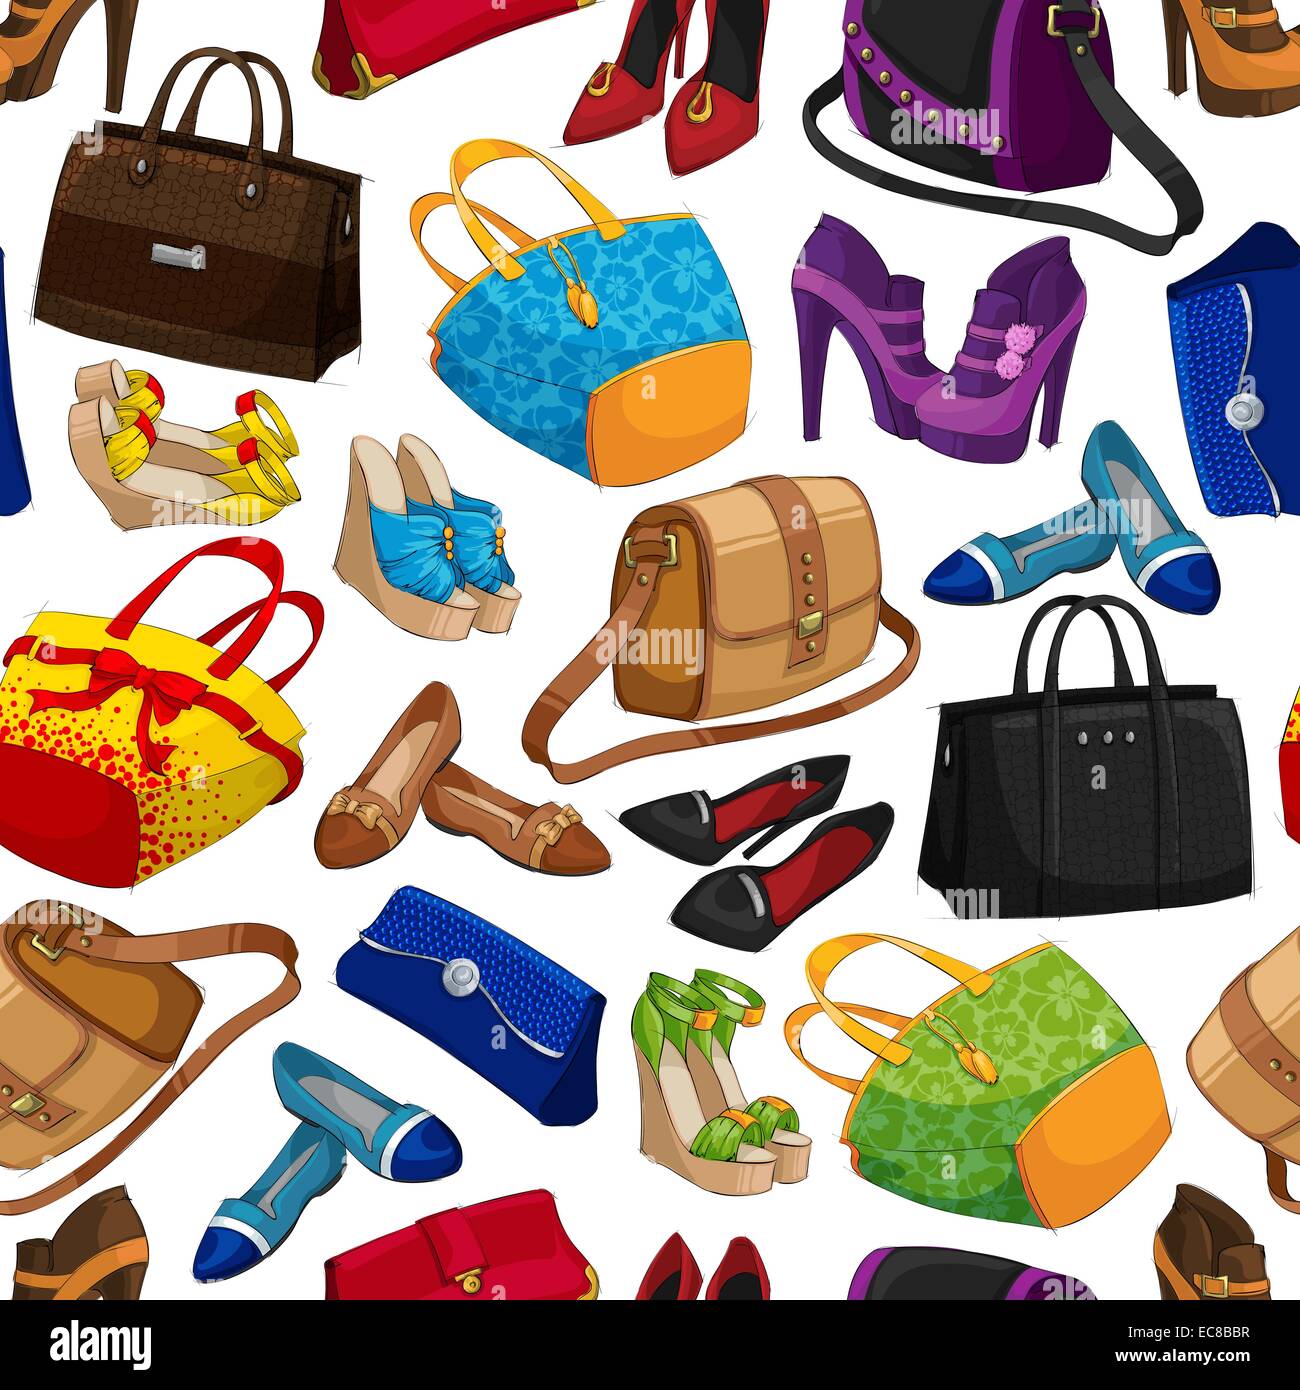 chanel shopper handbag